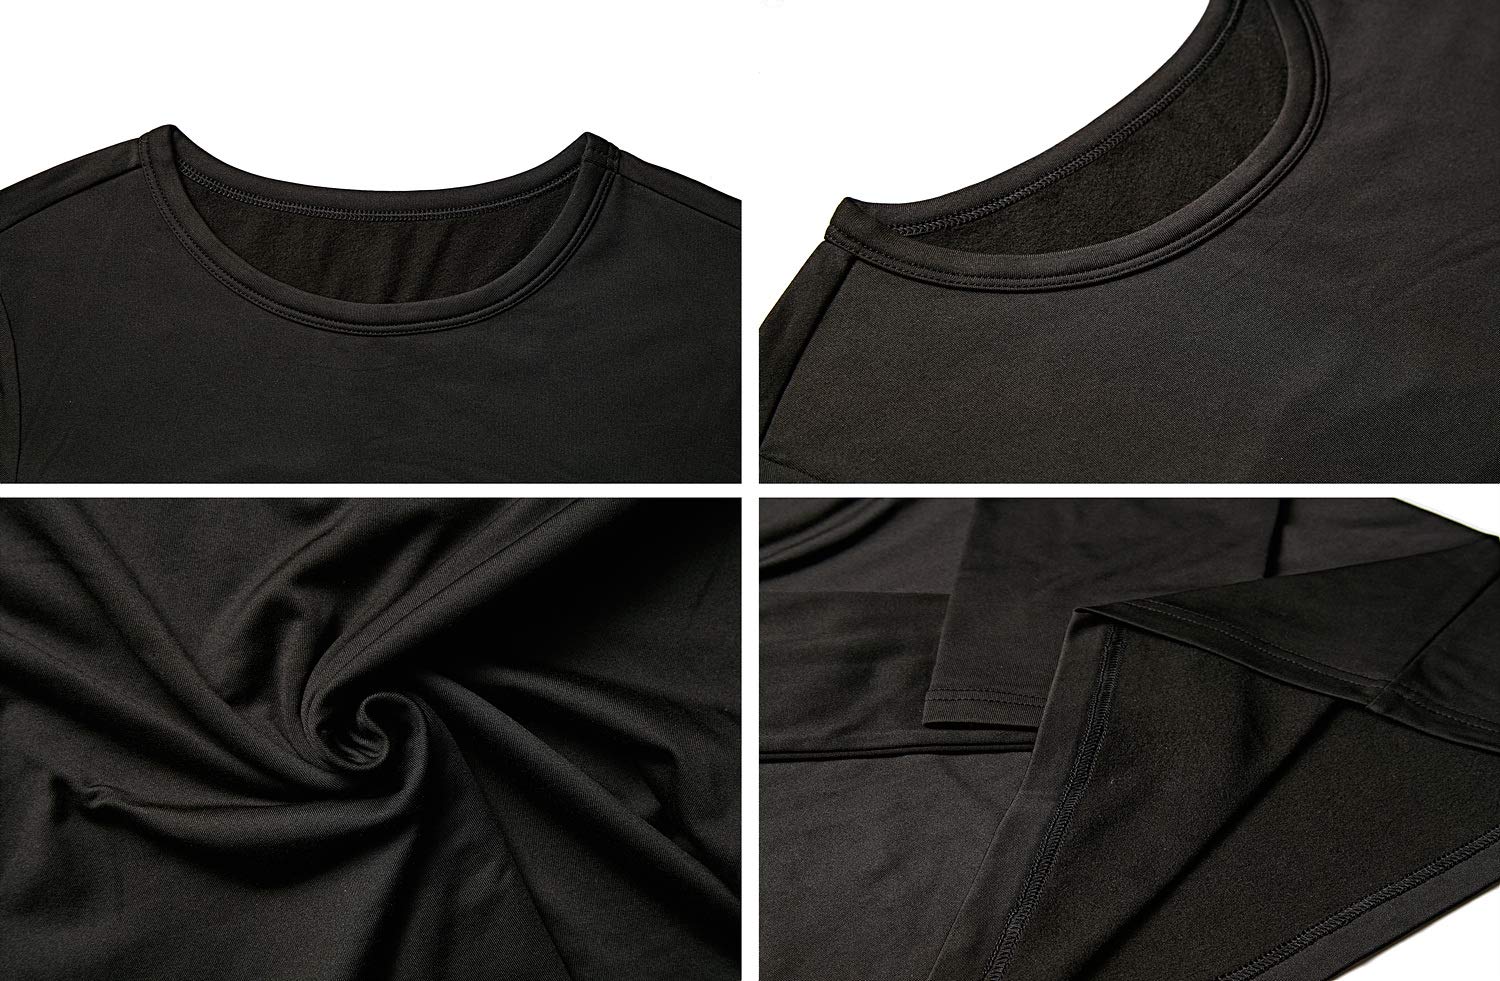 DEVOPS Boys and Girls Thermal Underwear Long Johns Set with Fleece Lined (Medium, Black)